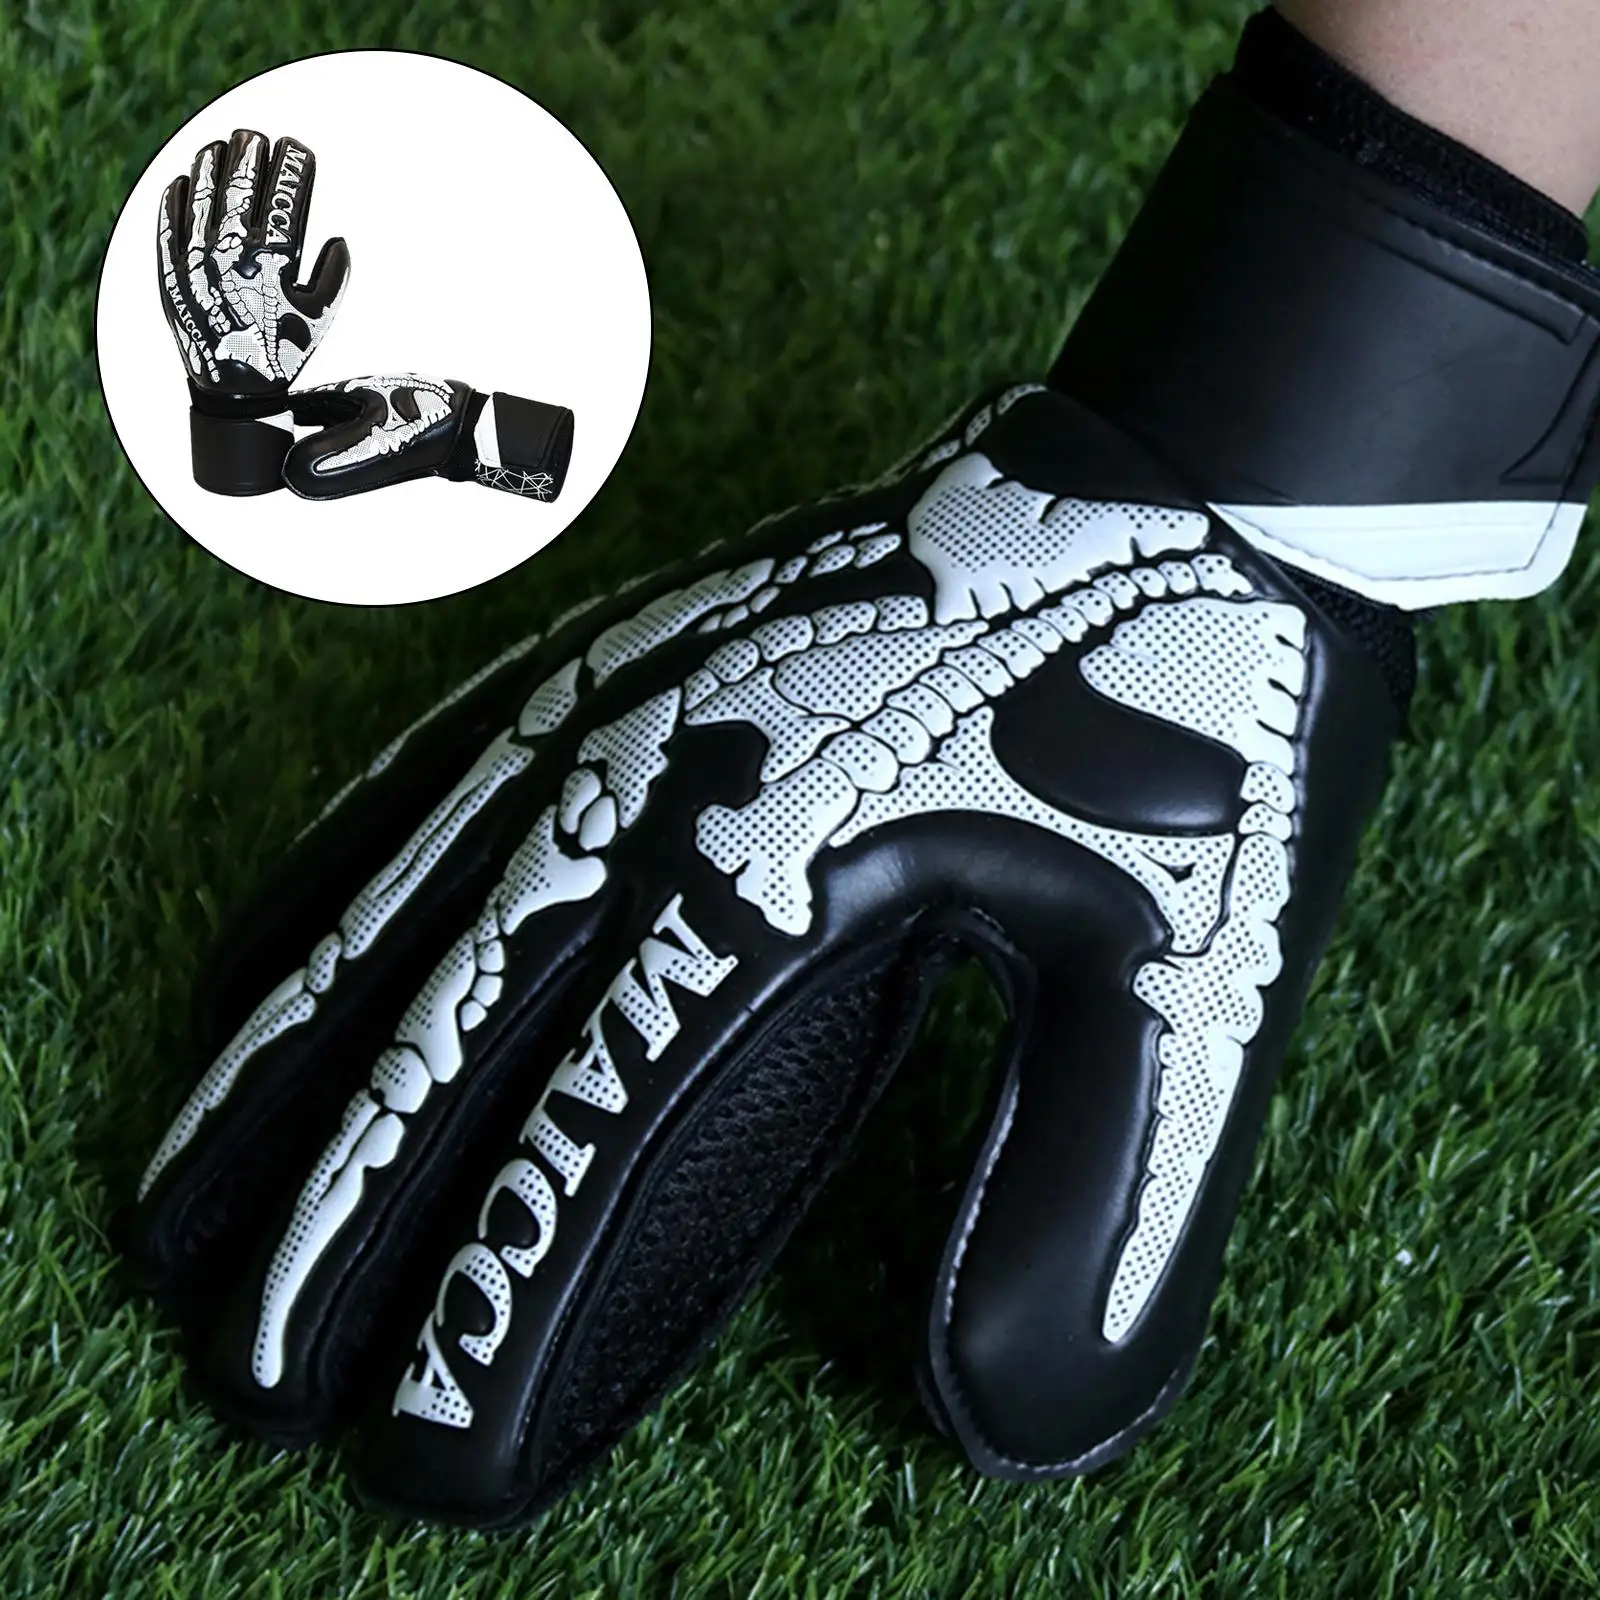 Goalkeeper Gloves Anti Slip Grip Palms Double Wrist Protection PU Gift Football Match for Kids Soccer Junior Age Girls Children